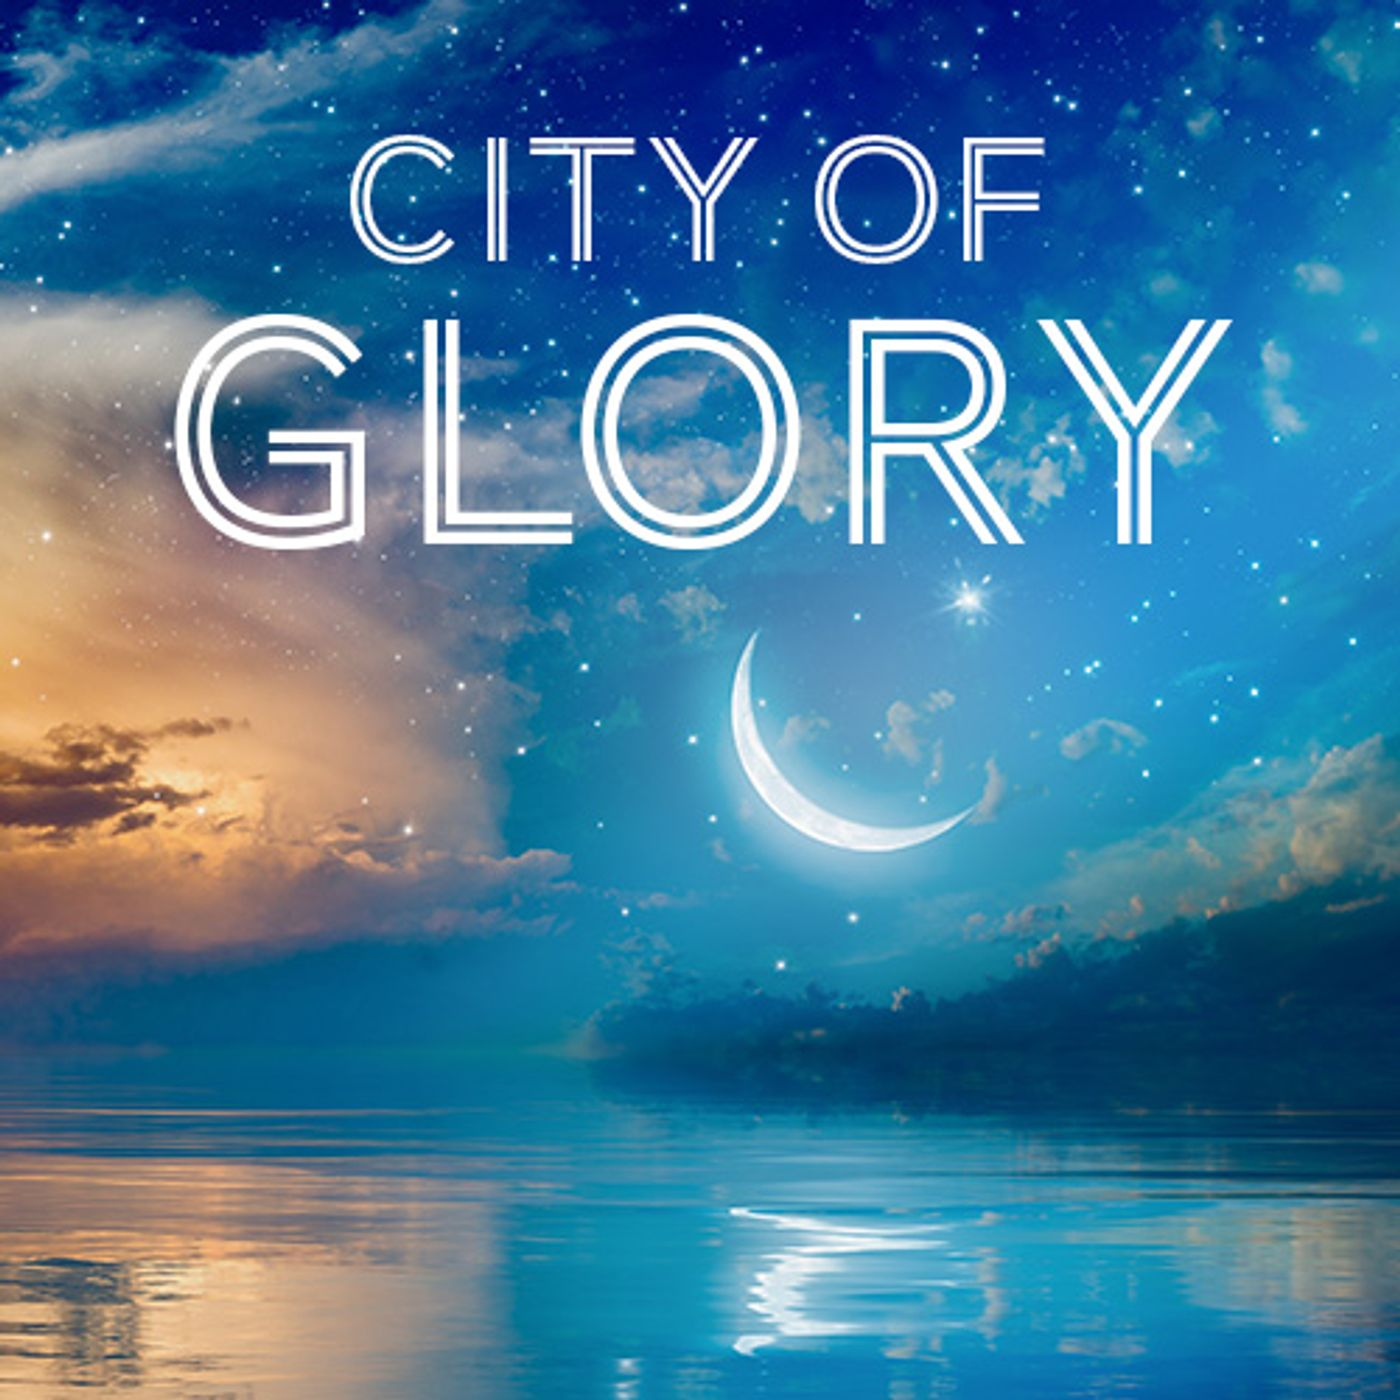 The City of Glory